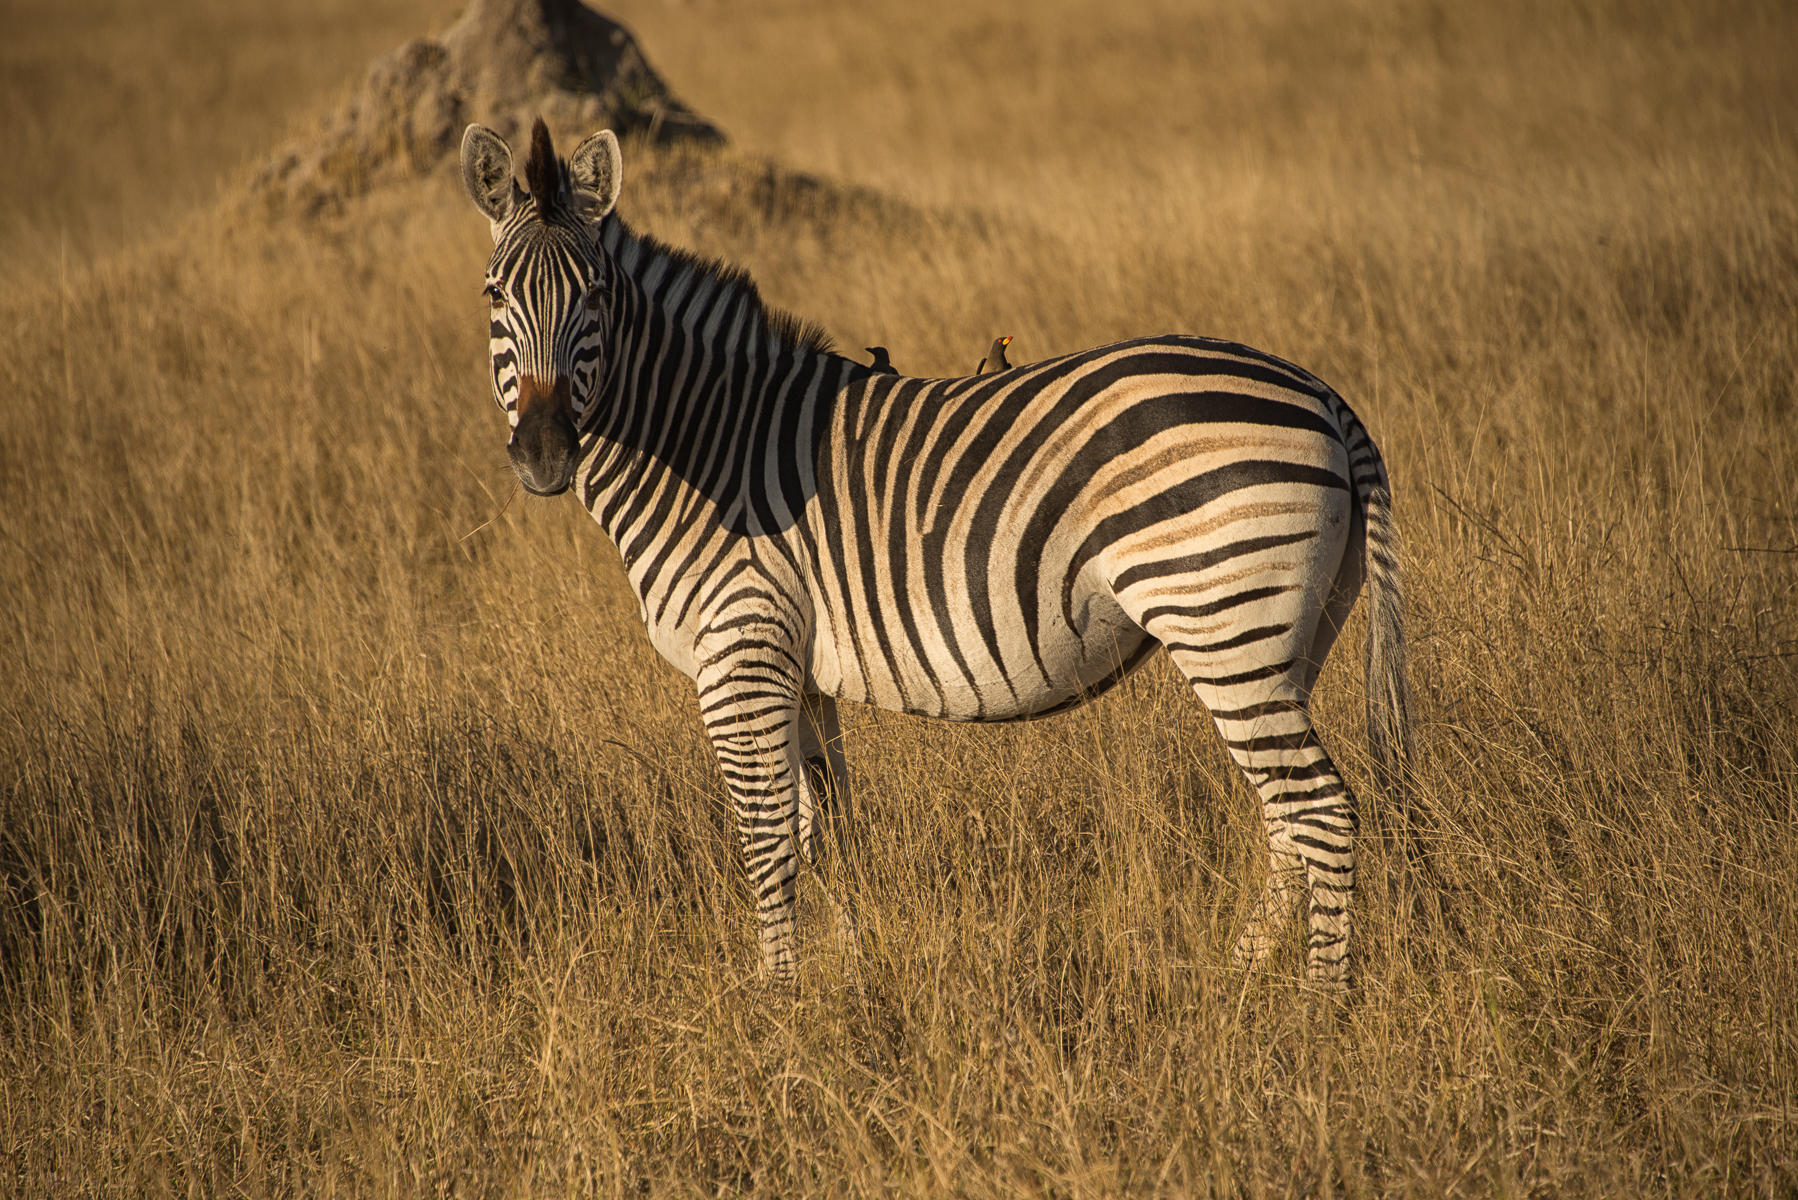 Zebra and Oxpecker's : Earthbound : ELIZABETH SANJUAN PHOTOGRAPHY